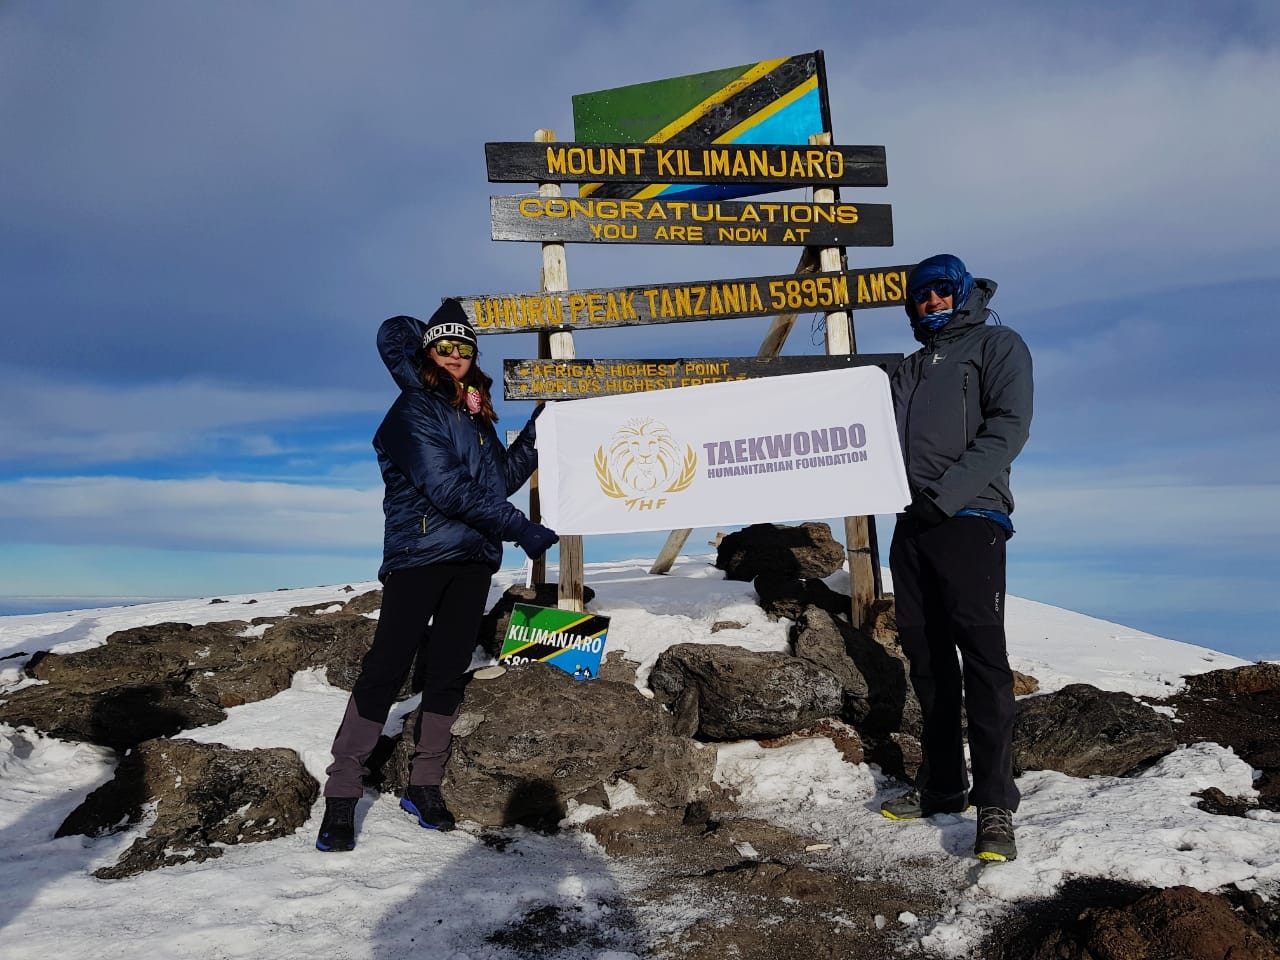 Taekwondo Humanitarian Foundation fundraising mission reaches Kilimanjaro's summit